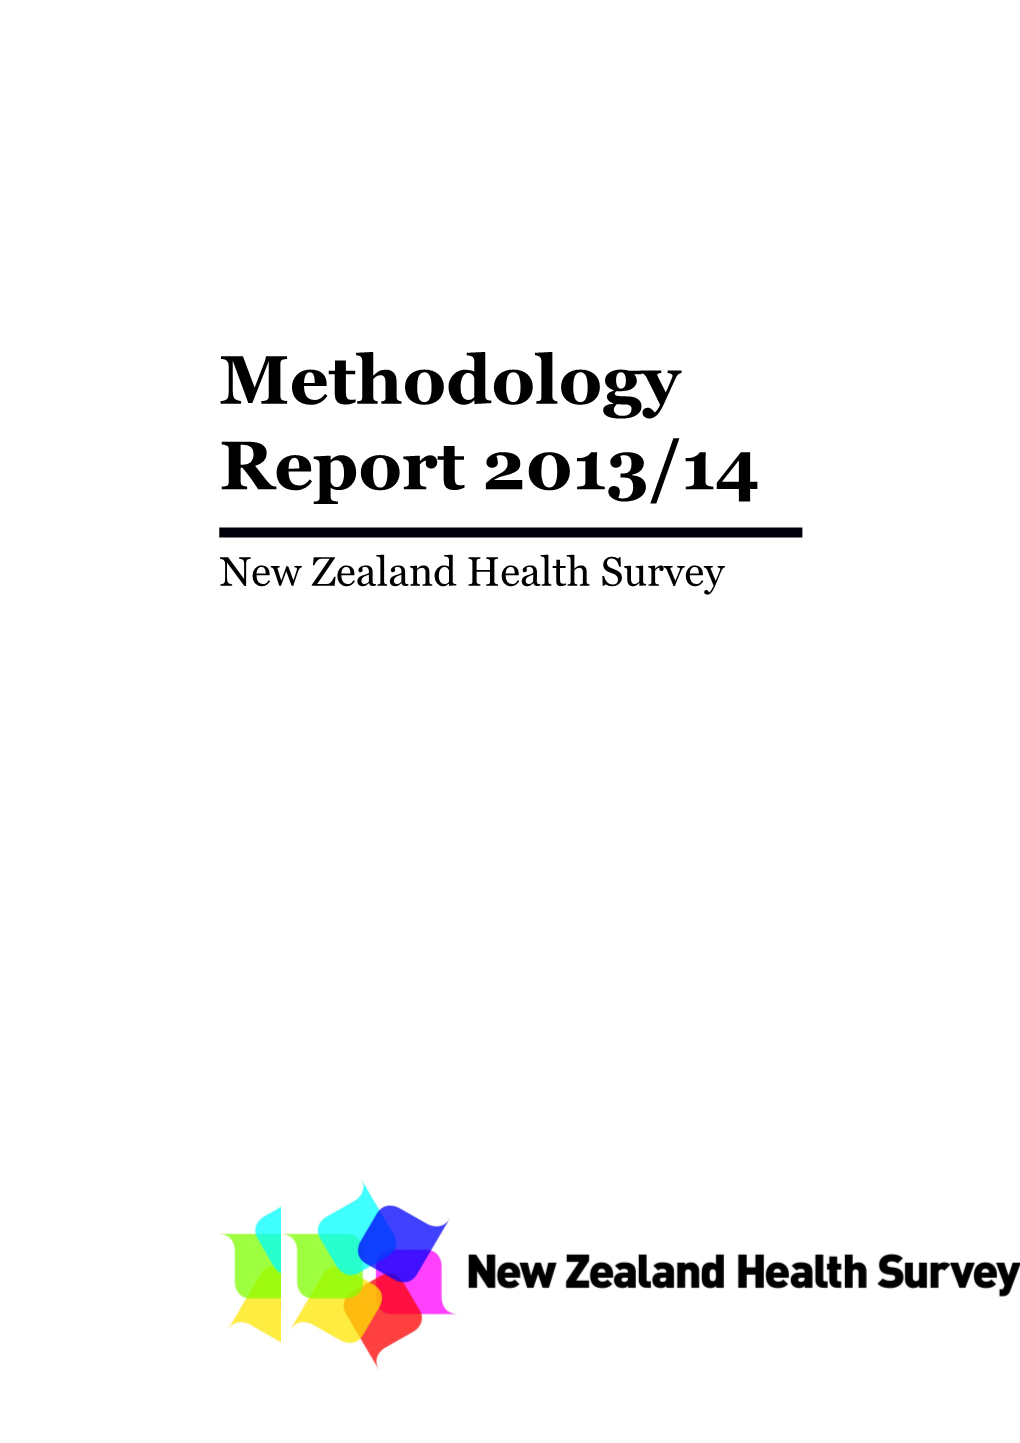 Methodology Report 2013/14: New Zealand Health Survey